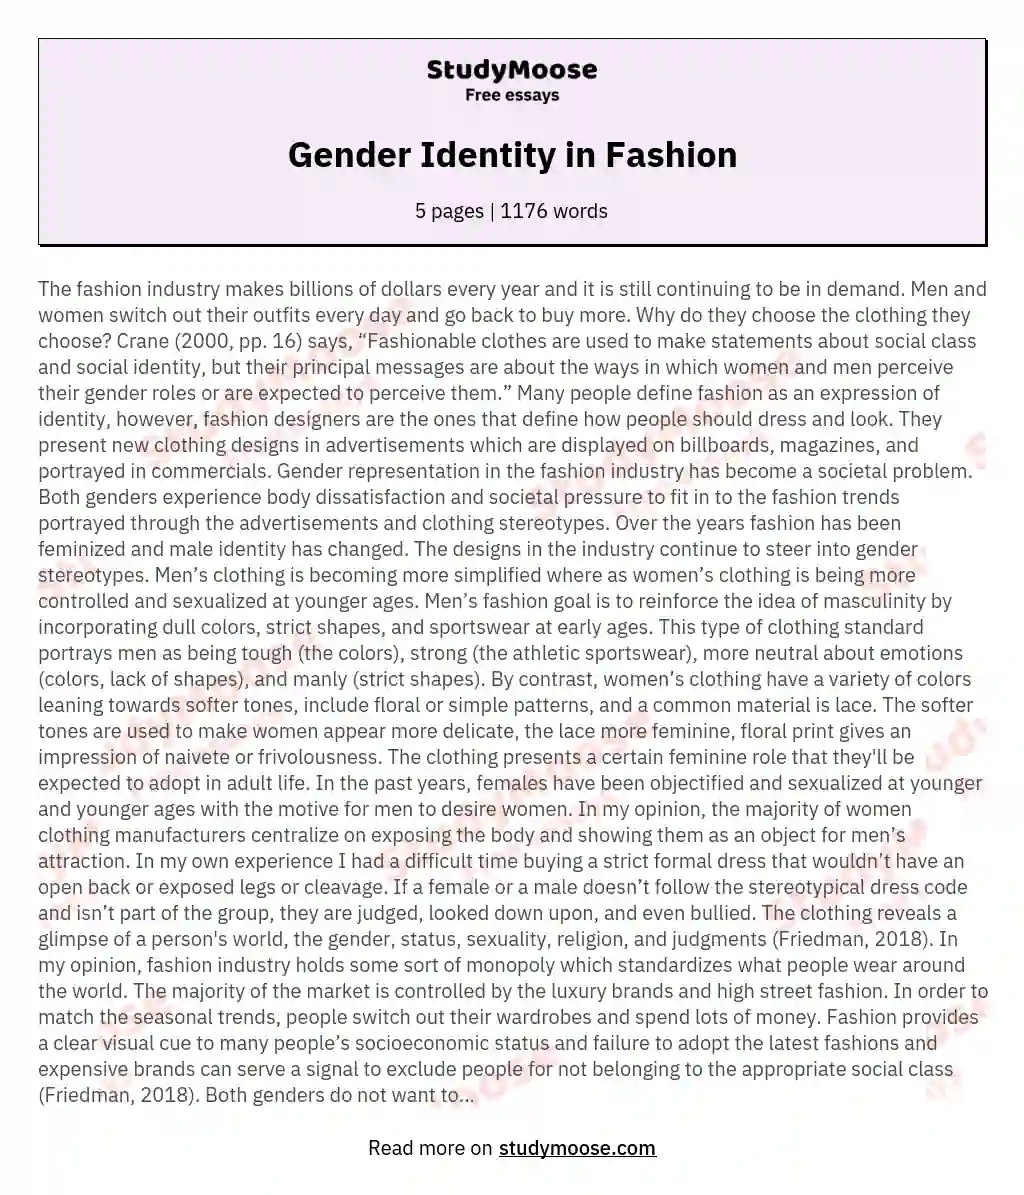 Gender Identity in Fashion essay